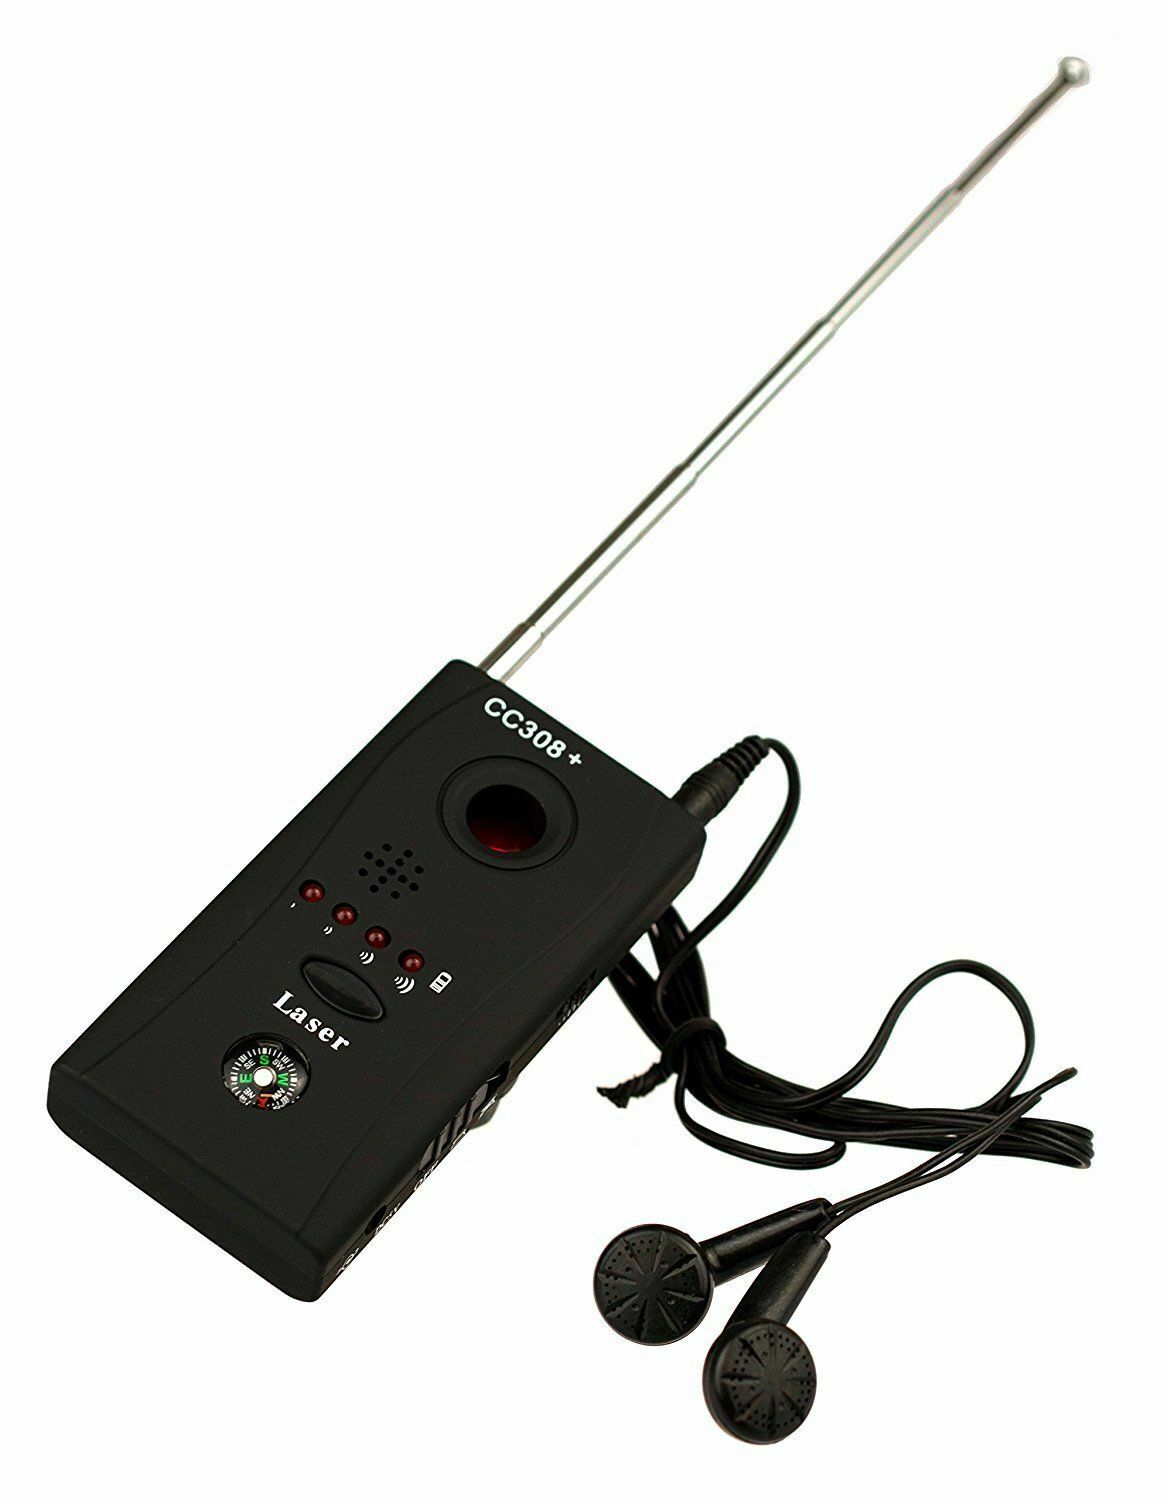 Wanze Finder Suchgerät Detektor Gps Gsm Telefon Signal Erkennung Auto Lkw A50 